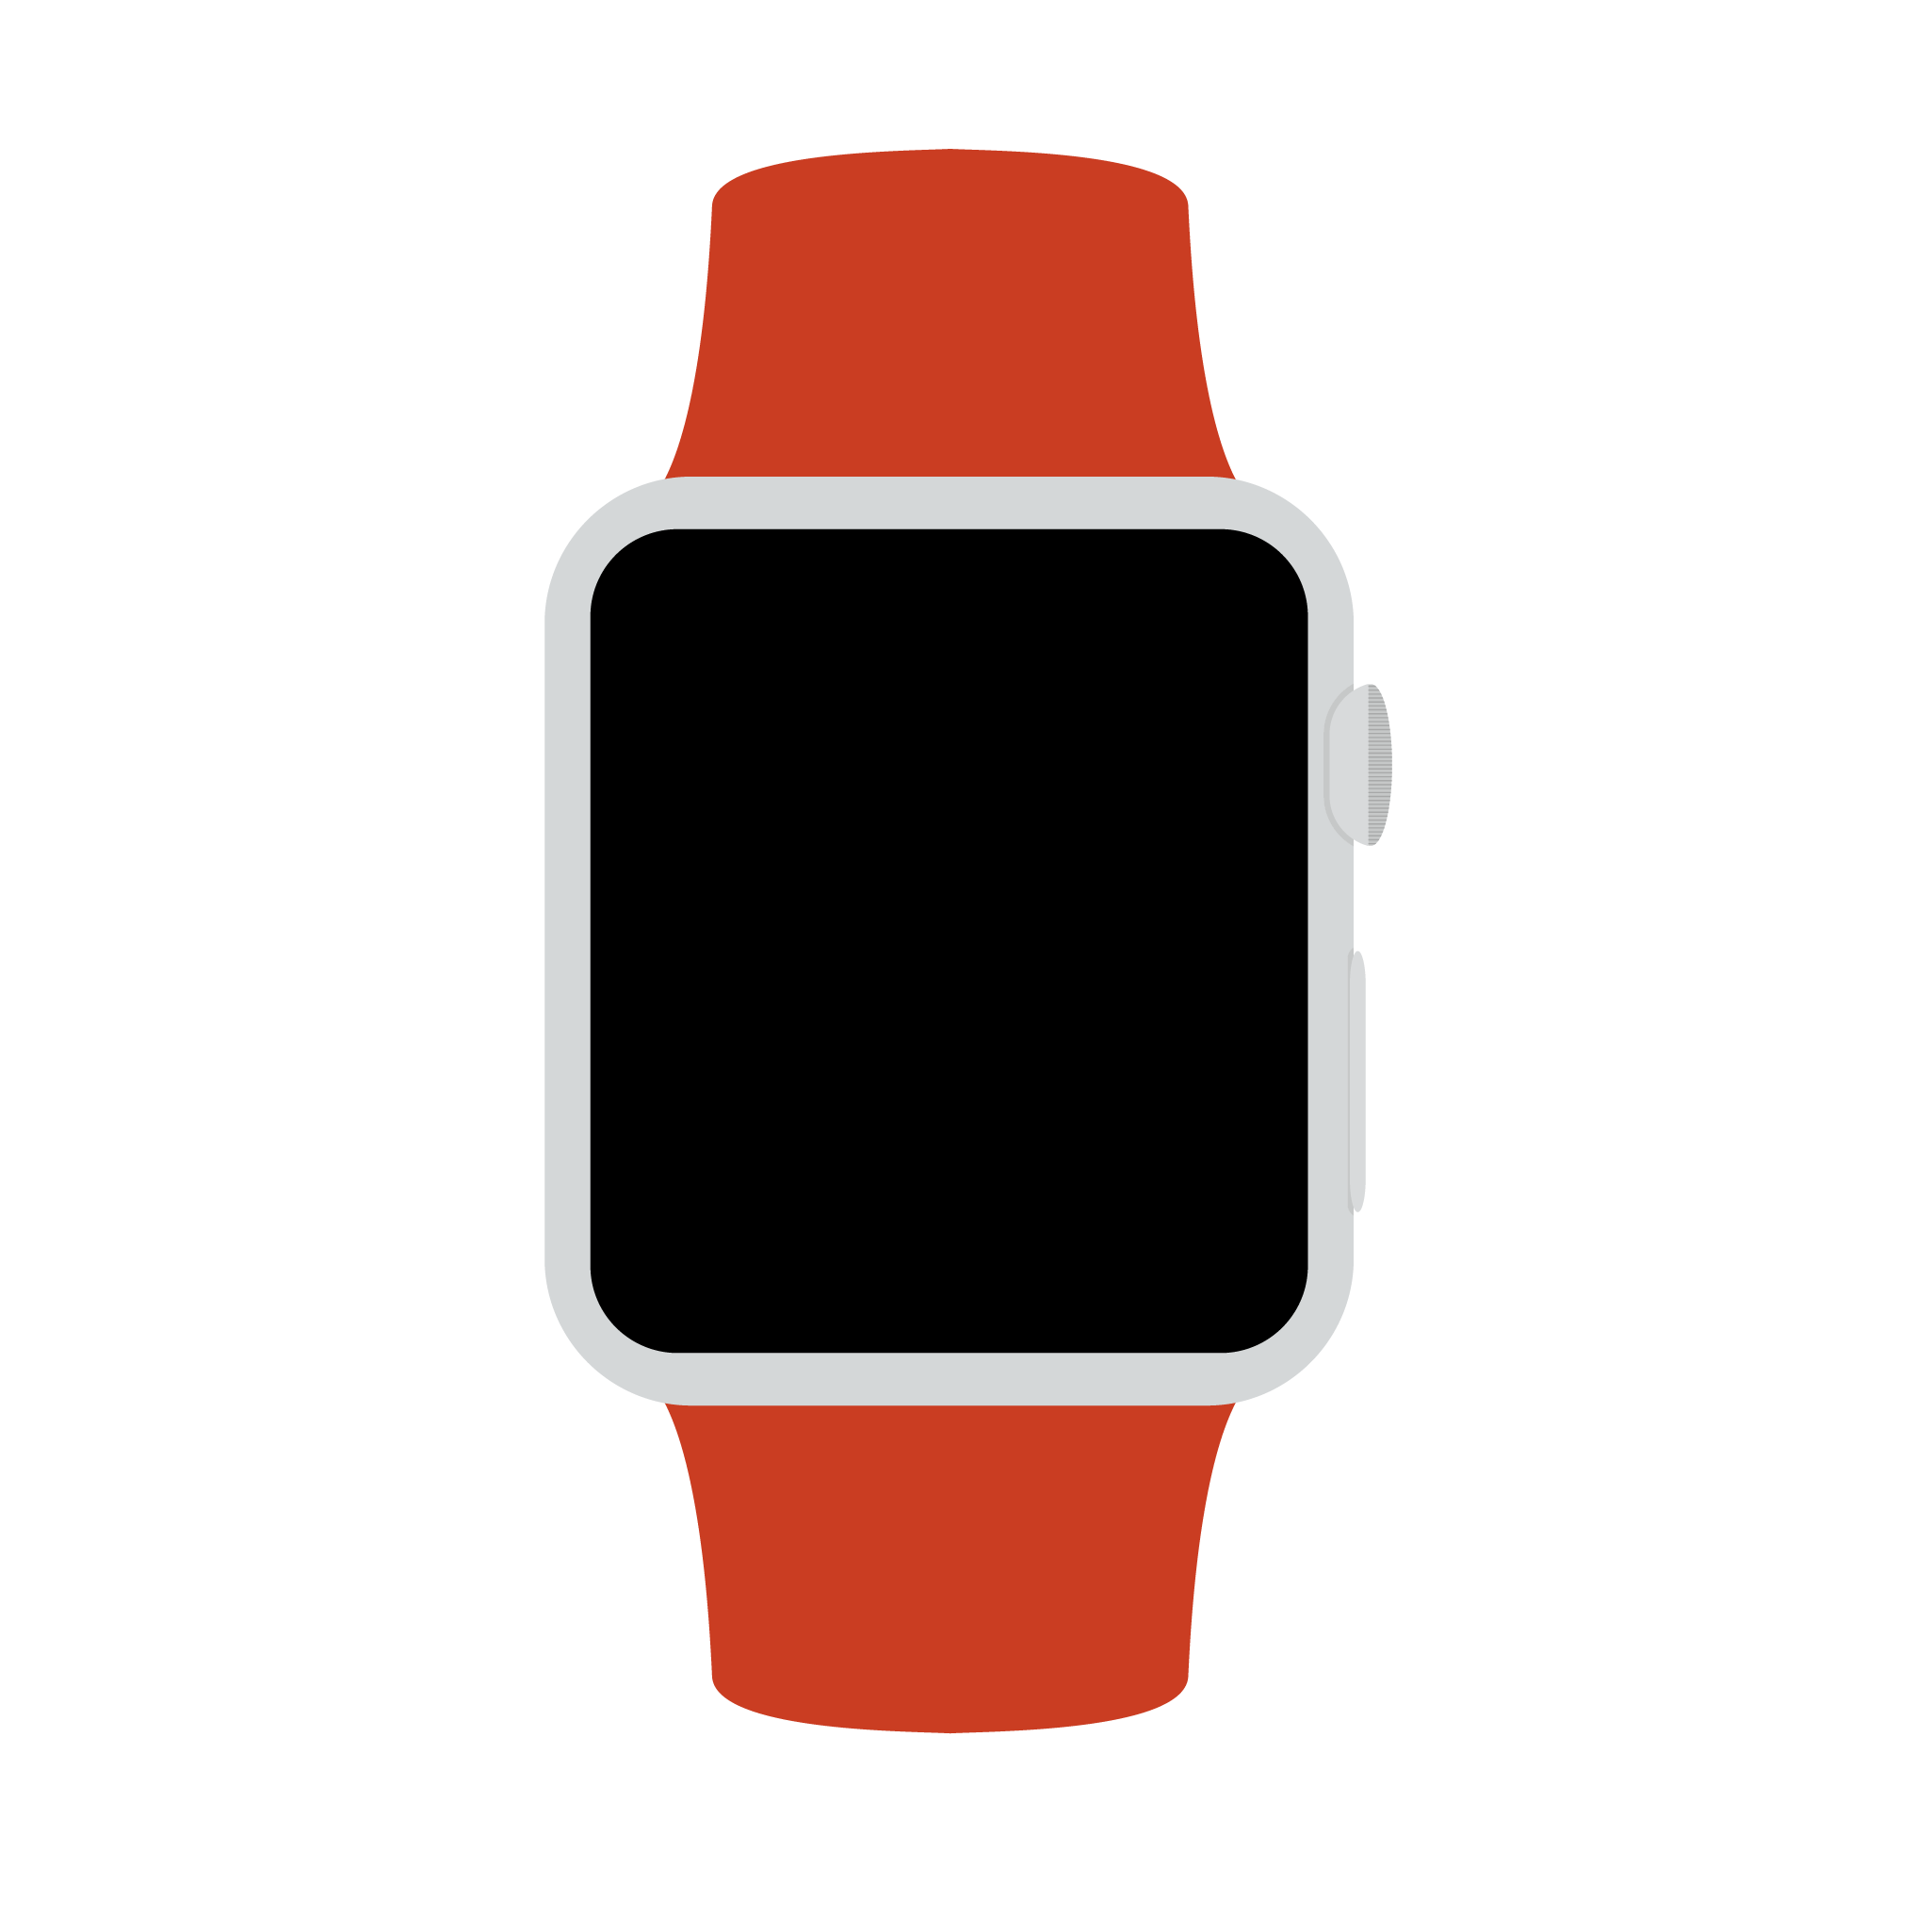 Red watch illustration